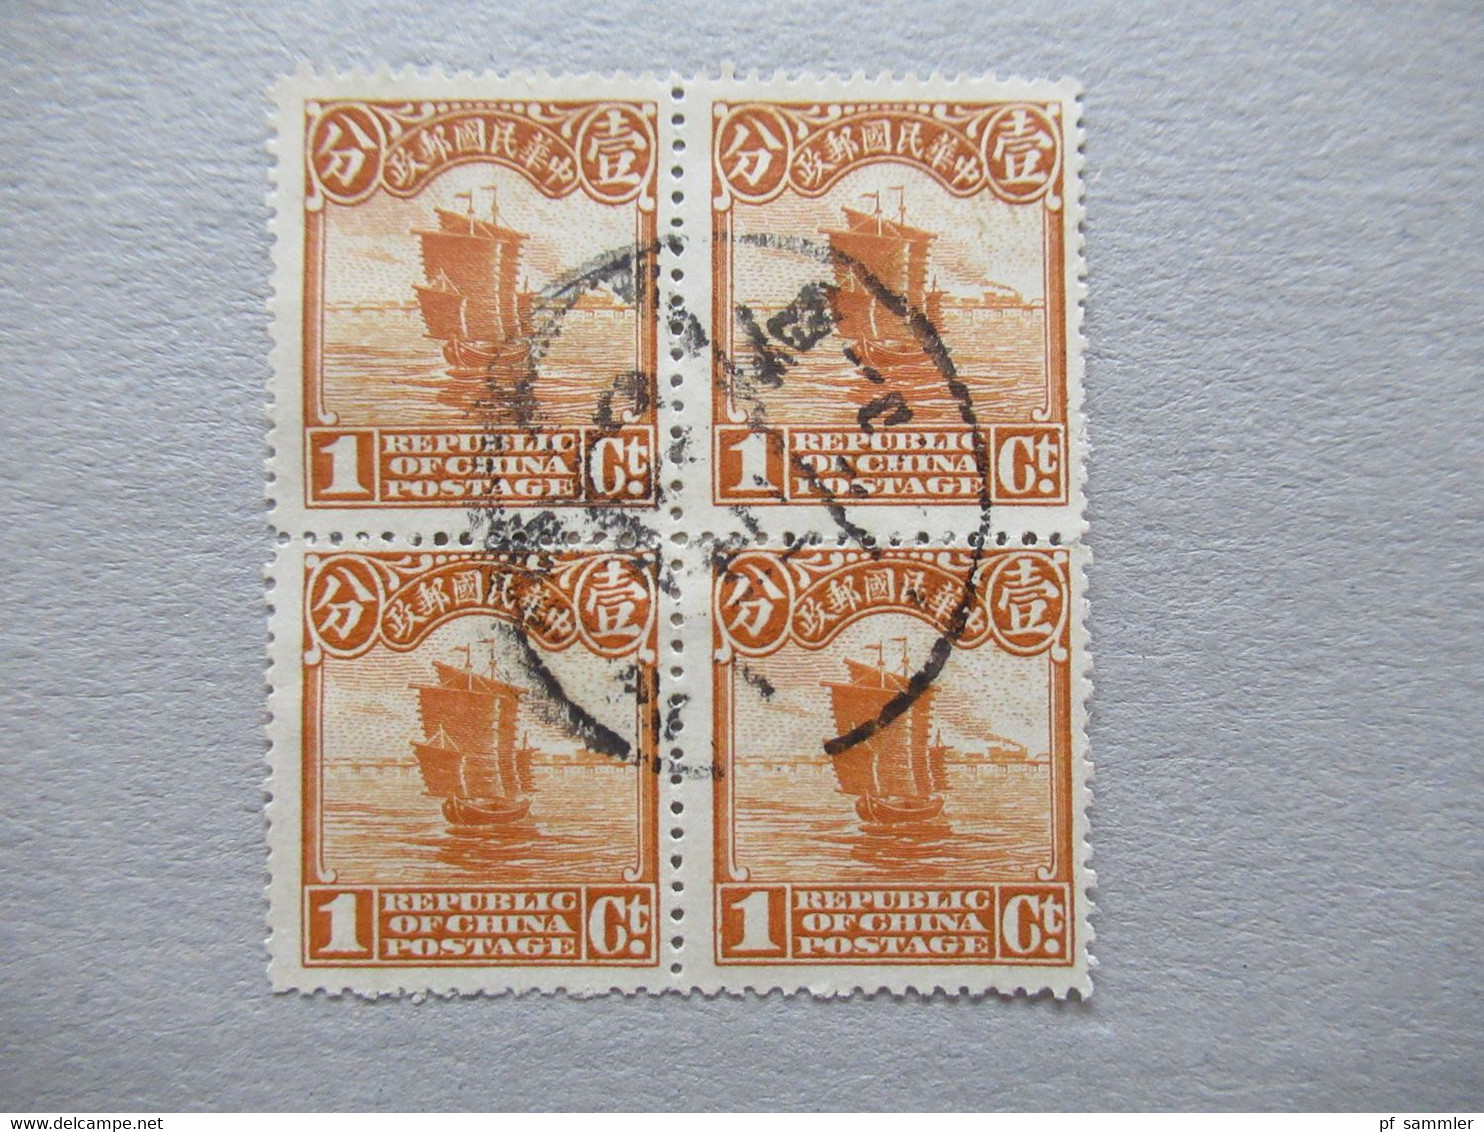 Asien China Volksrepublik Dschunke 1 Cent Im 4er Block / Gestempel 1920er Jahre - 1912-1949 República